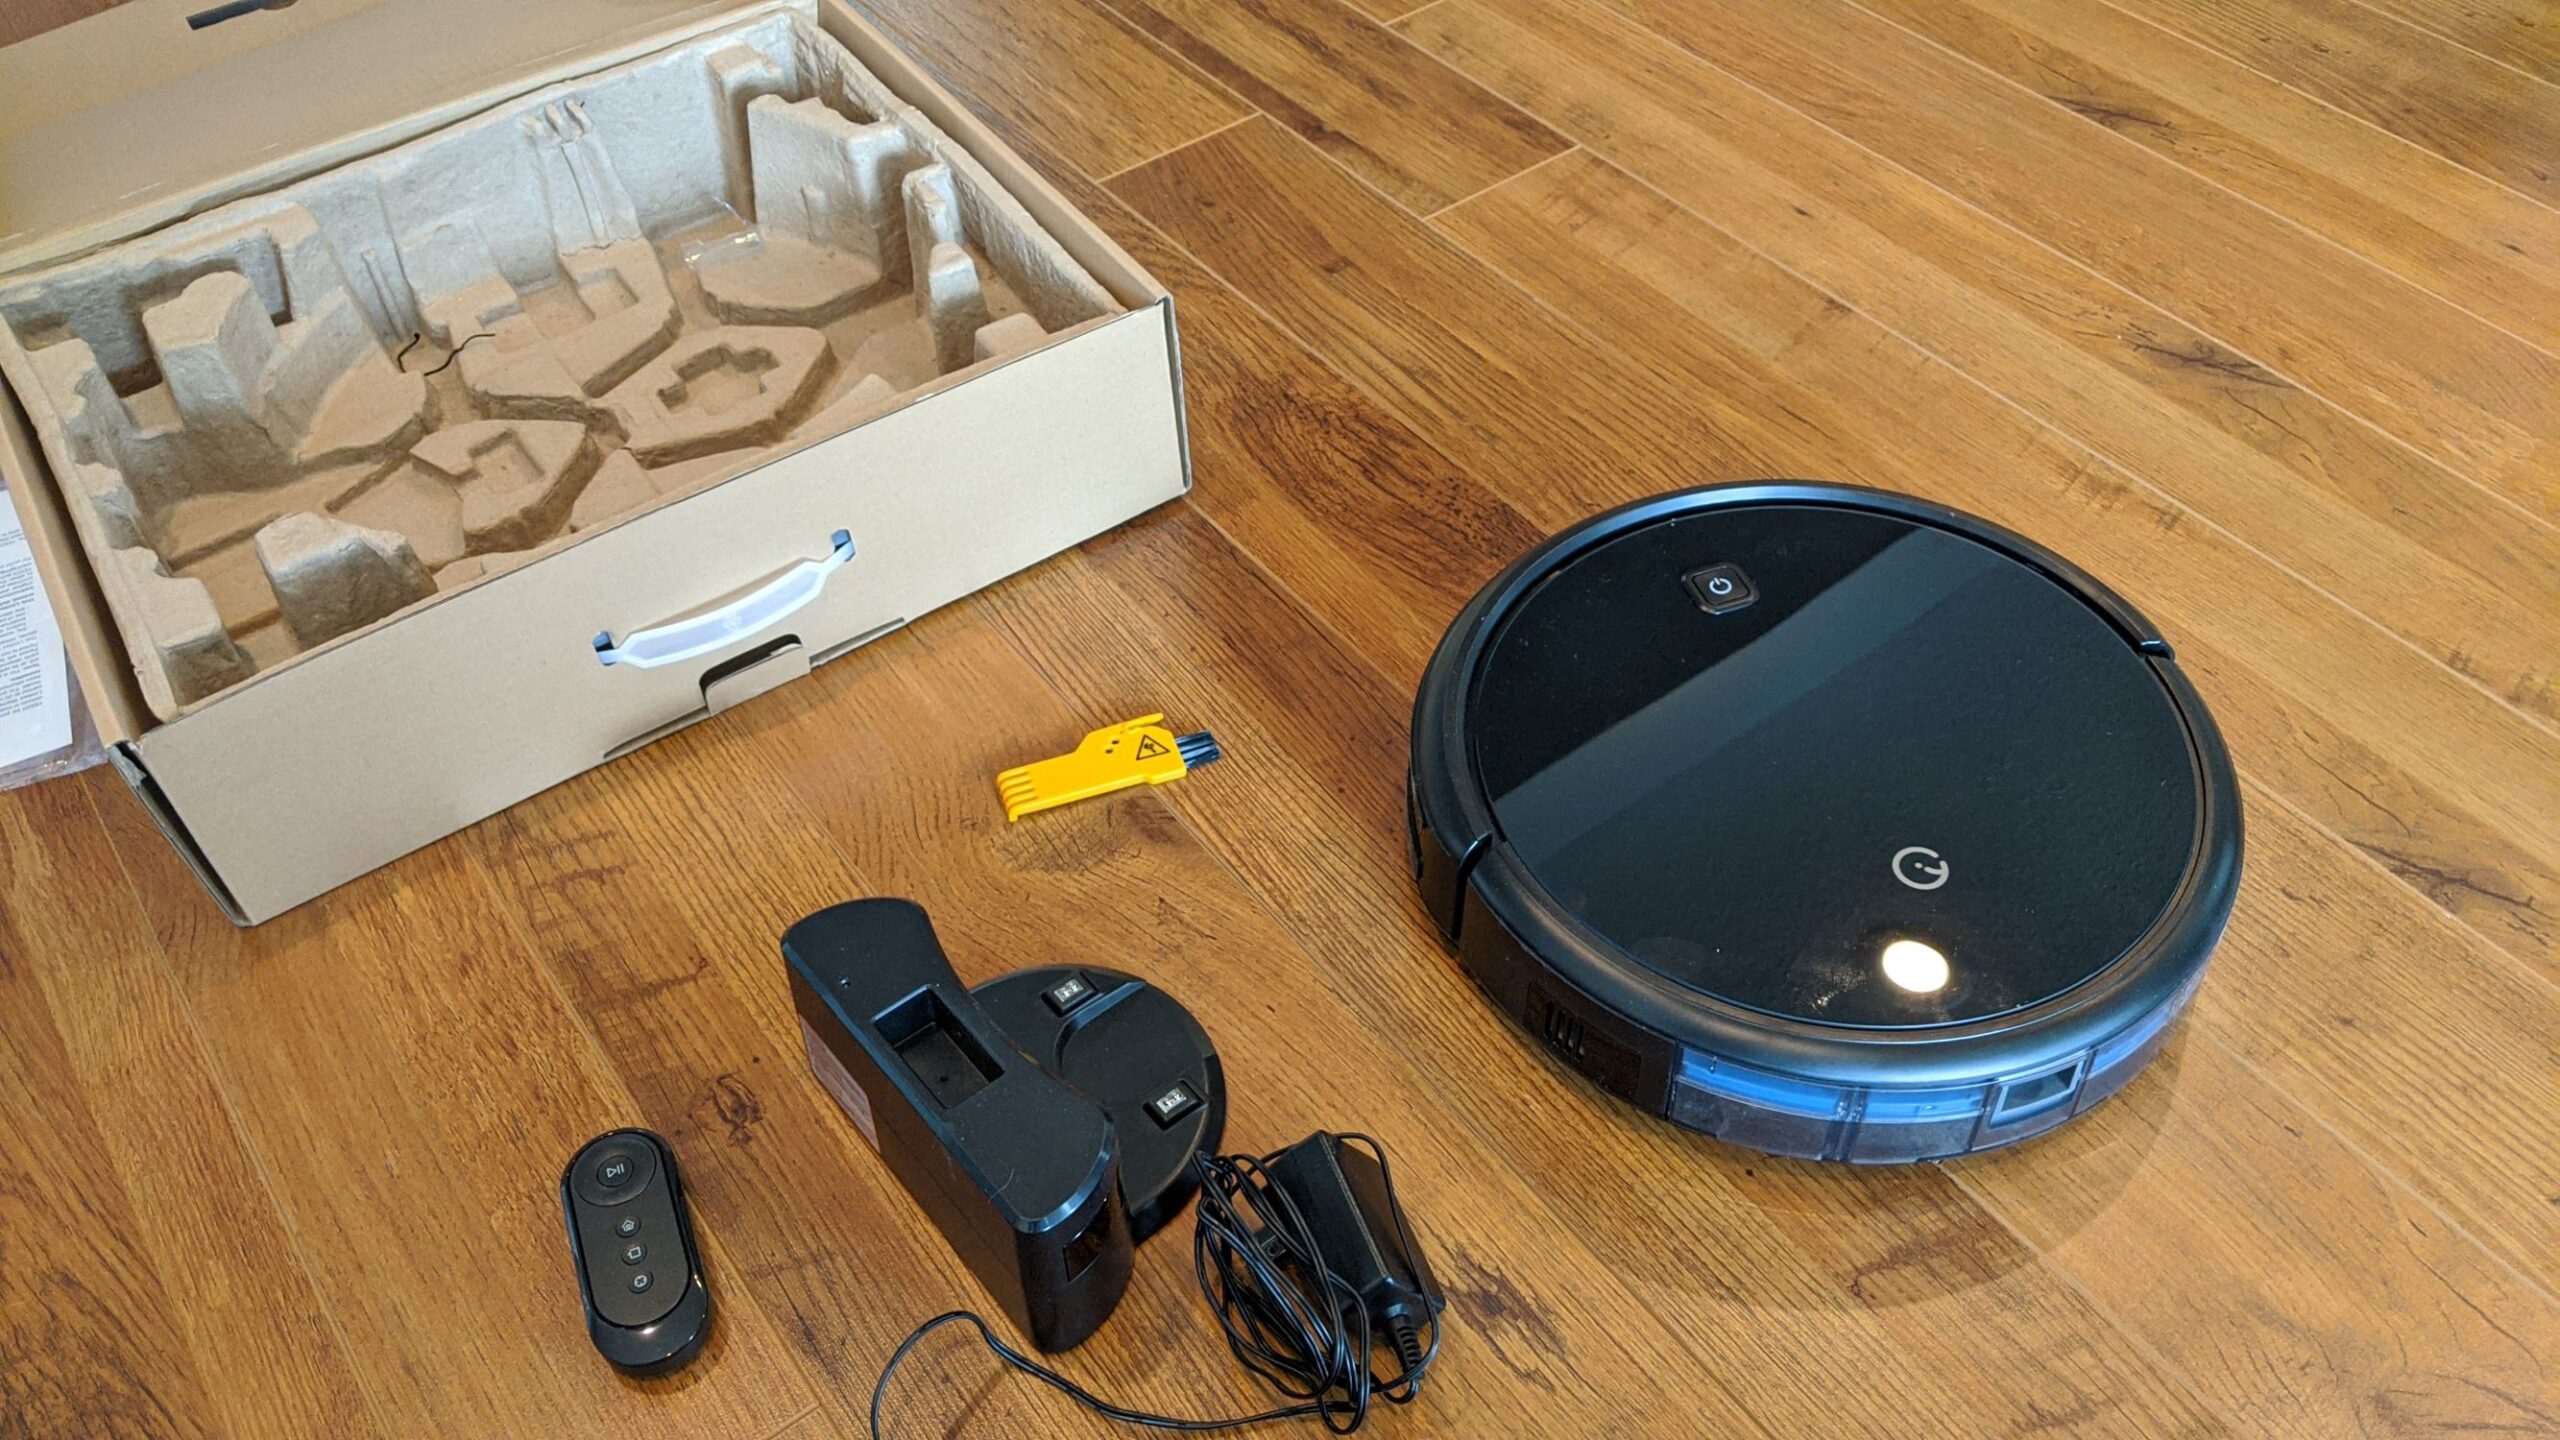 Yeedi K600 Robot Vacuum Cleaner Review